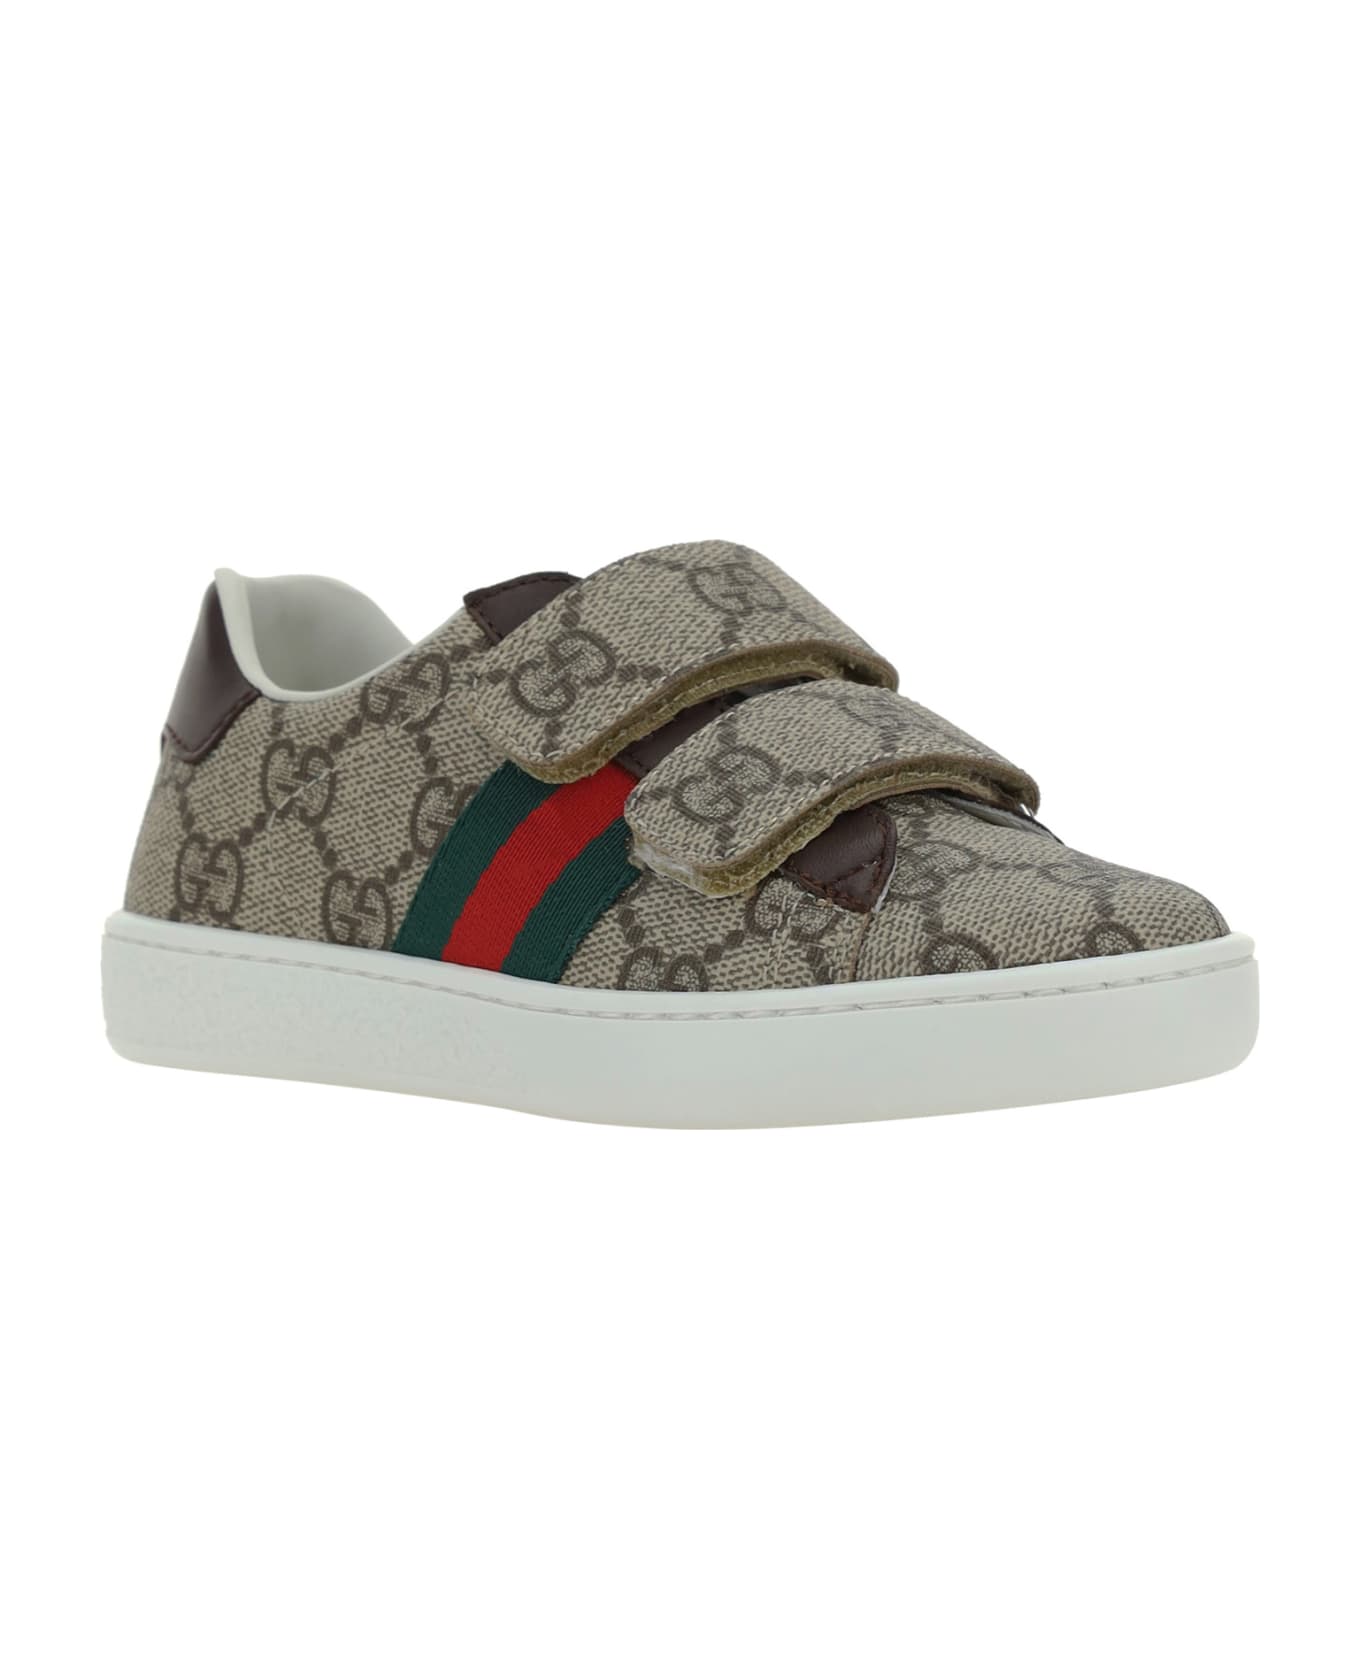 Gucci Sneakers For Boy - Beige シューズ